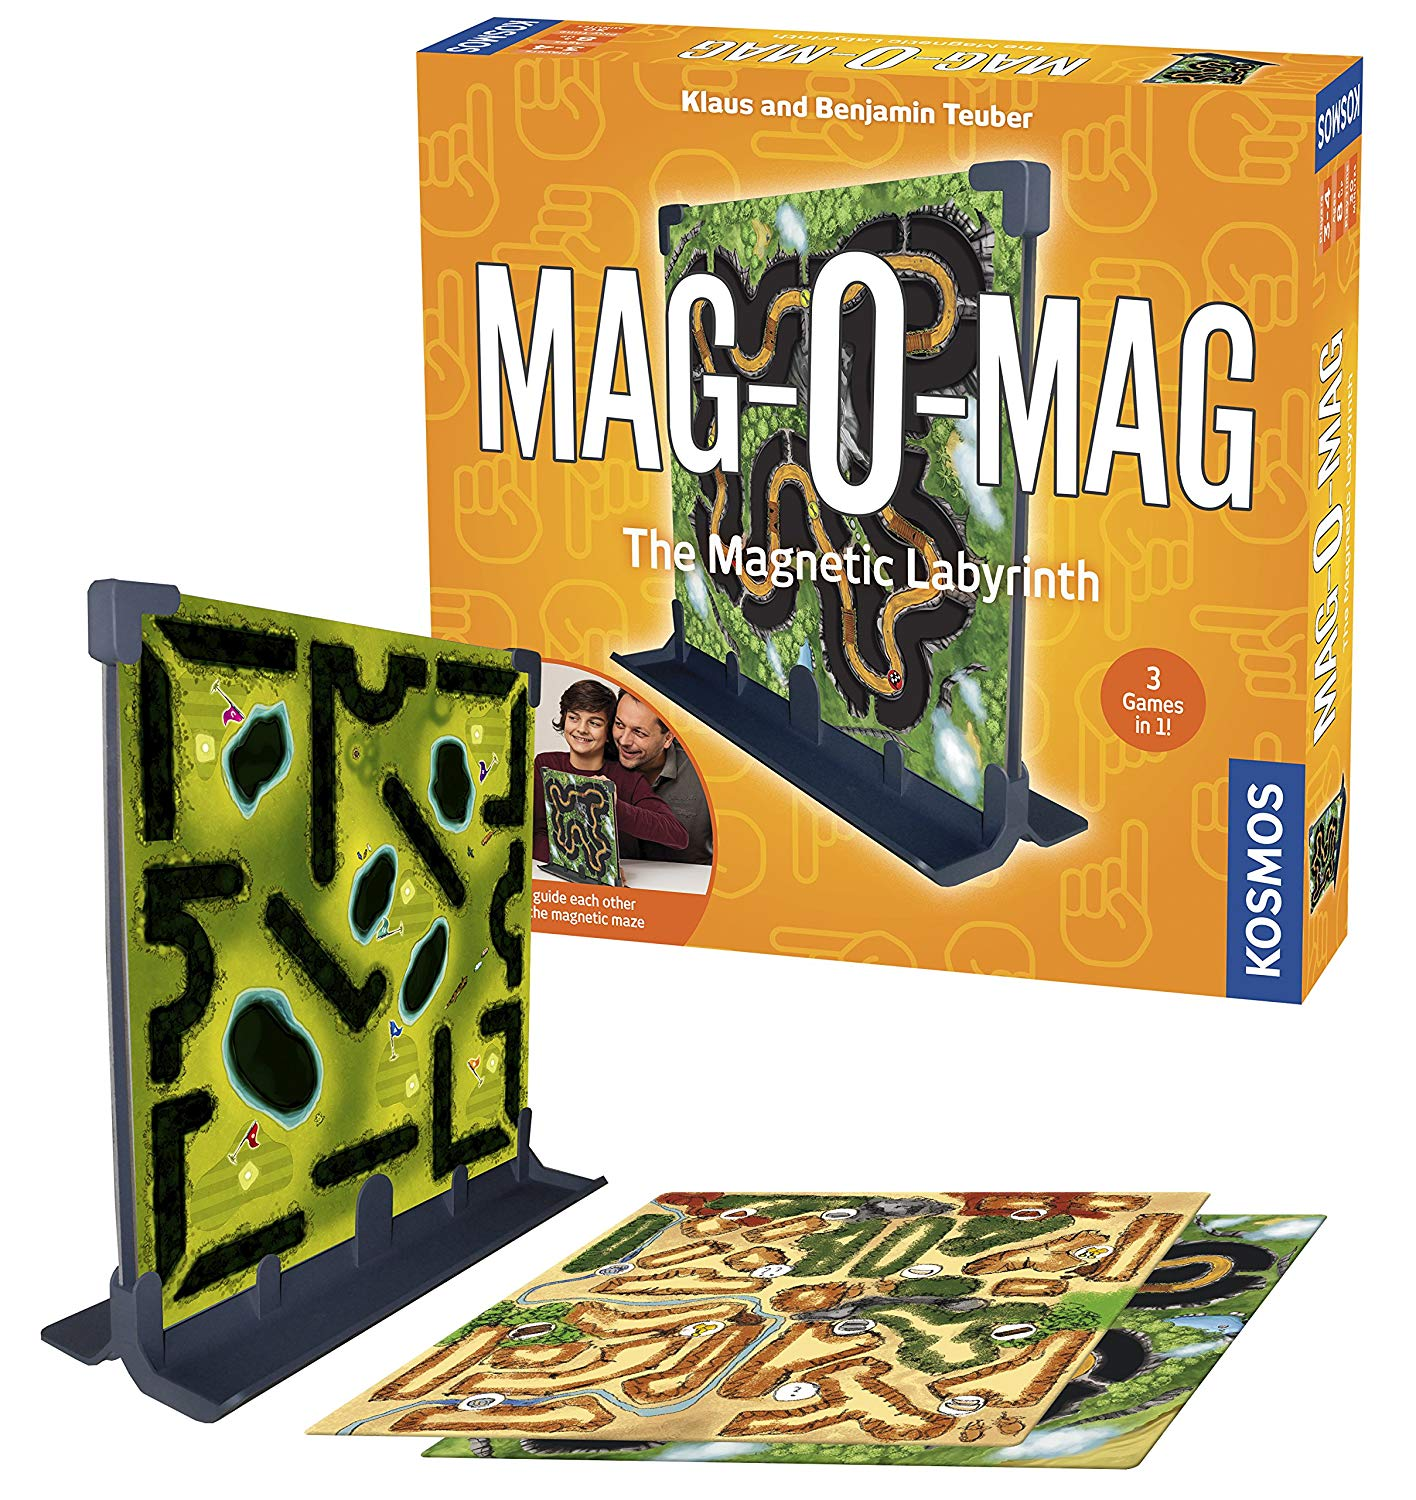 Thames & Kosmos Mag-O-Mag (The Magnetic Ladyrinth) Game Only $6.85! (Reg $39.95)